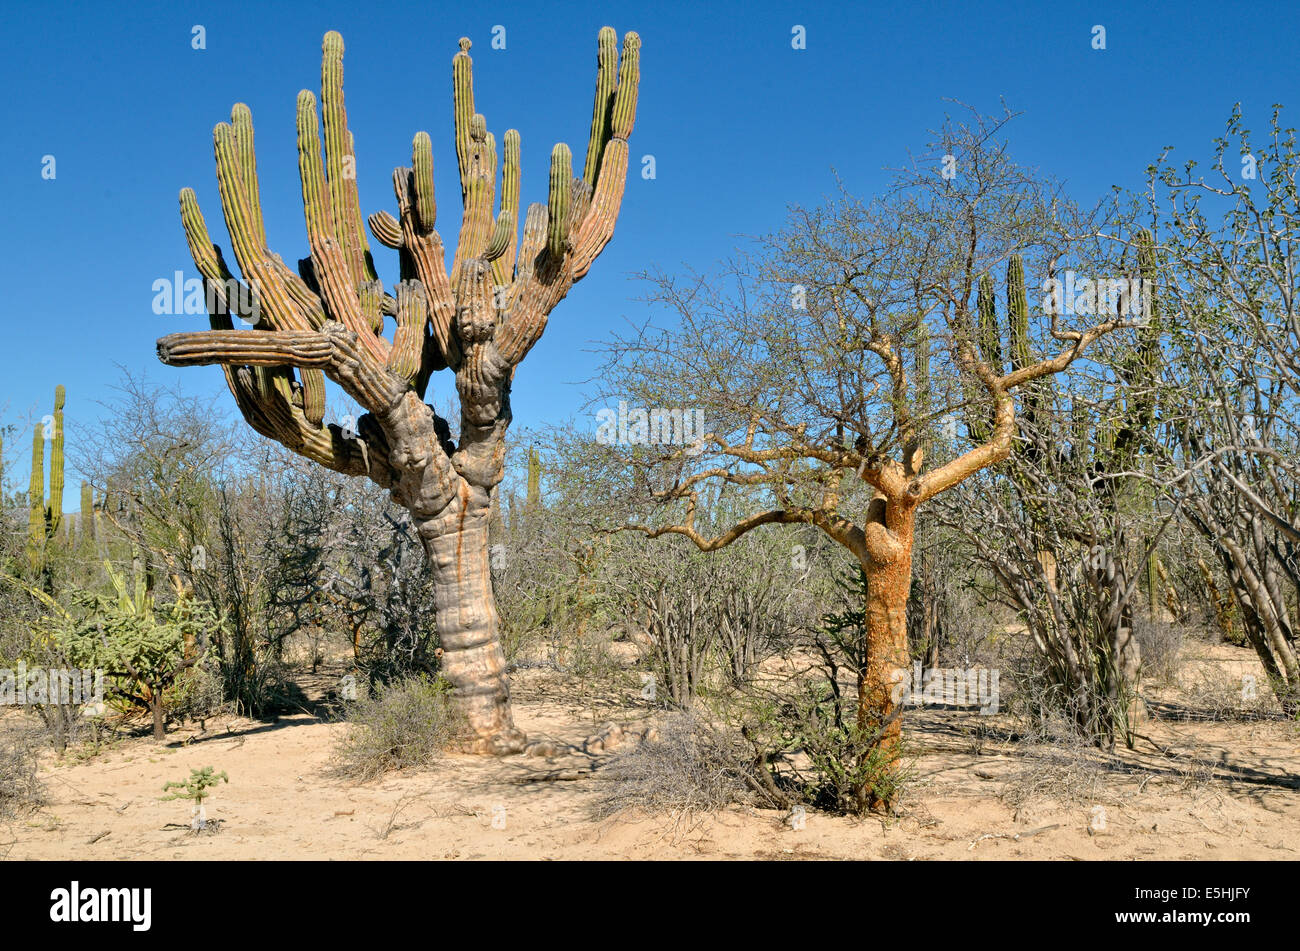 Cardon Cactus (Pachycereus pringlei) and Elephant Tree (Bursera microphylla), Cactus steppe near La Ventana, Baja California Sur Stock Photo